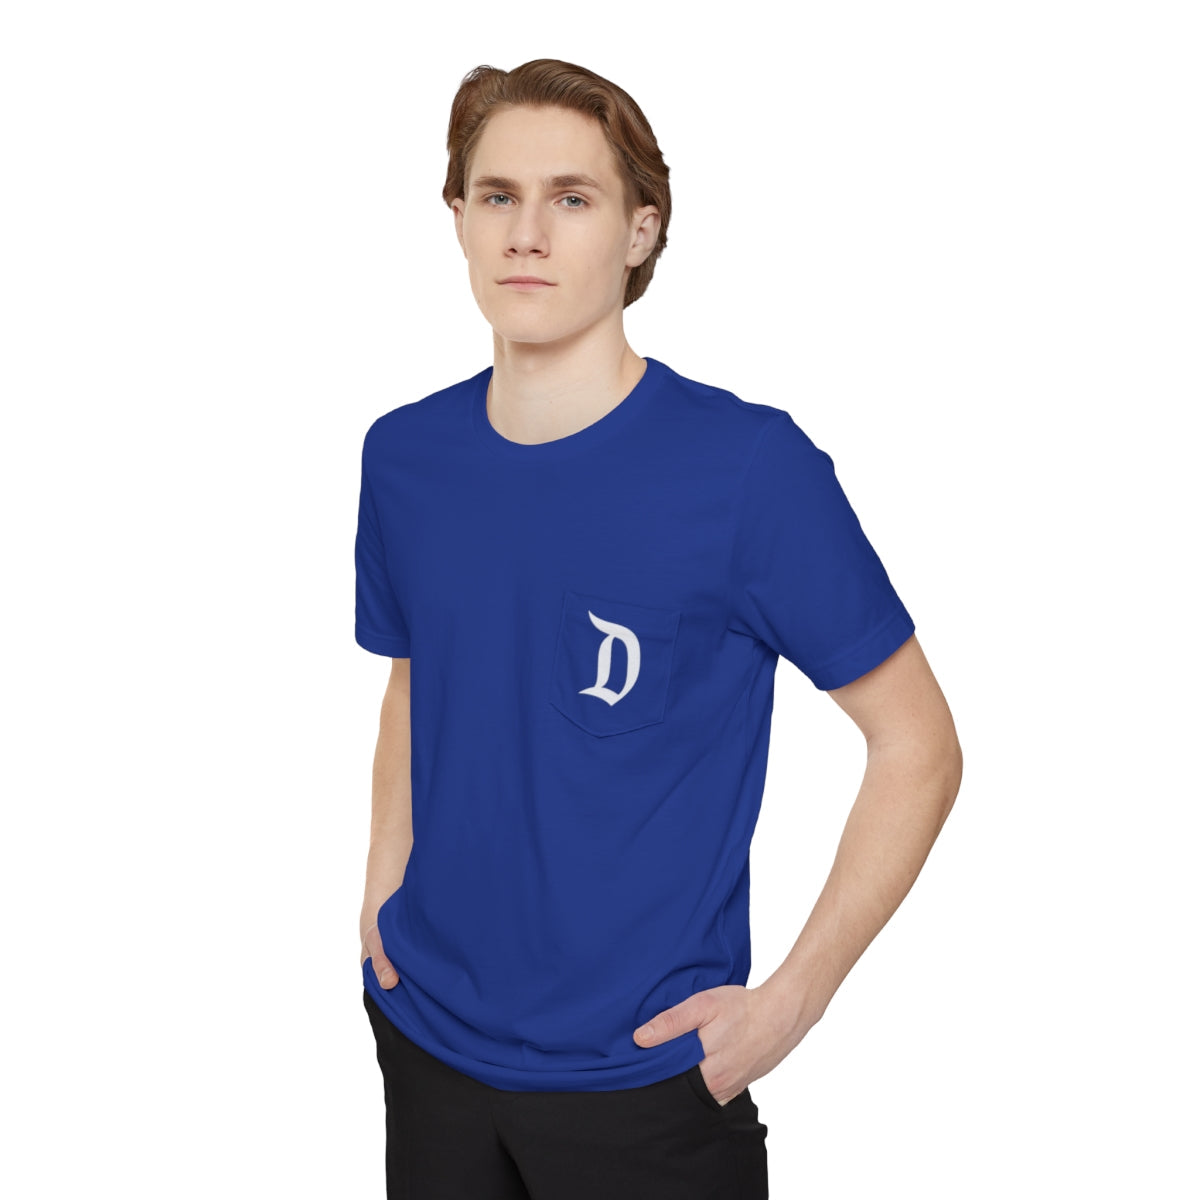 Disneyland D mens t-shirt 